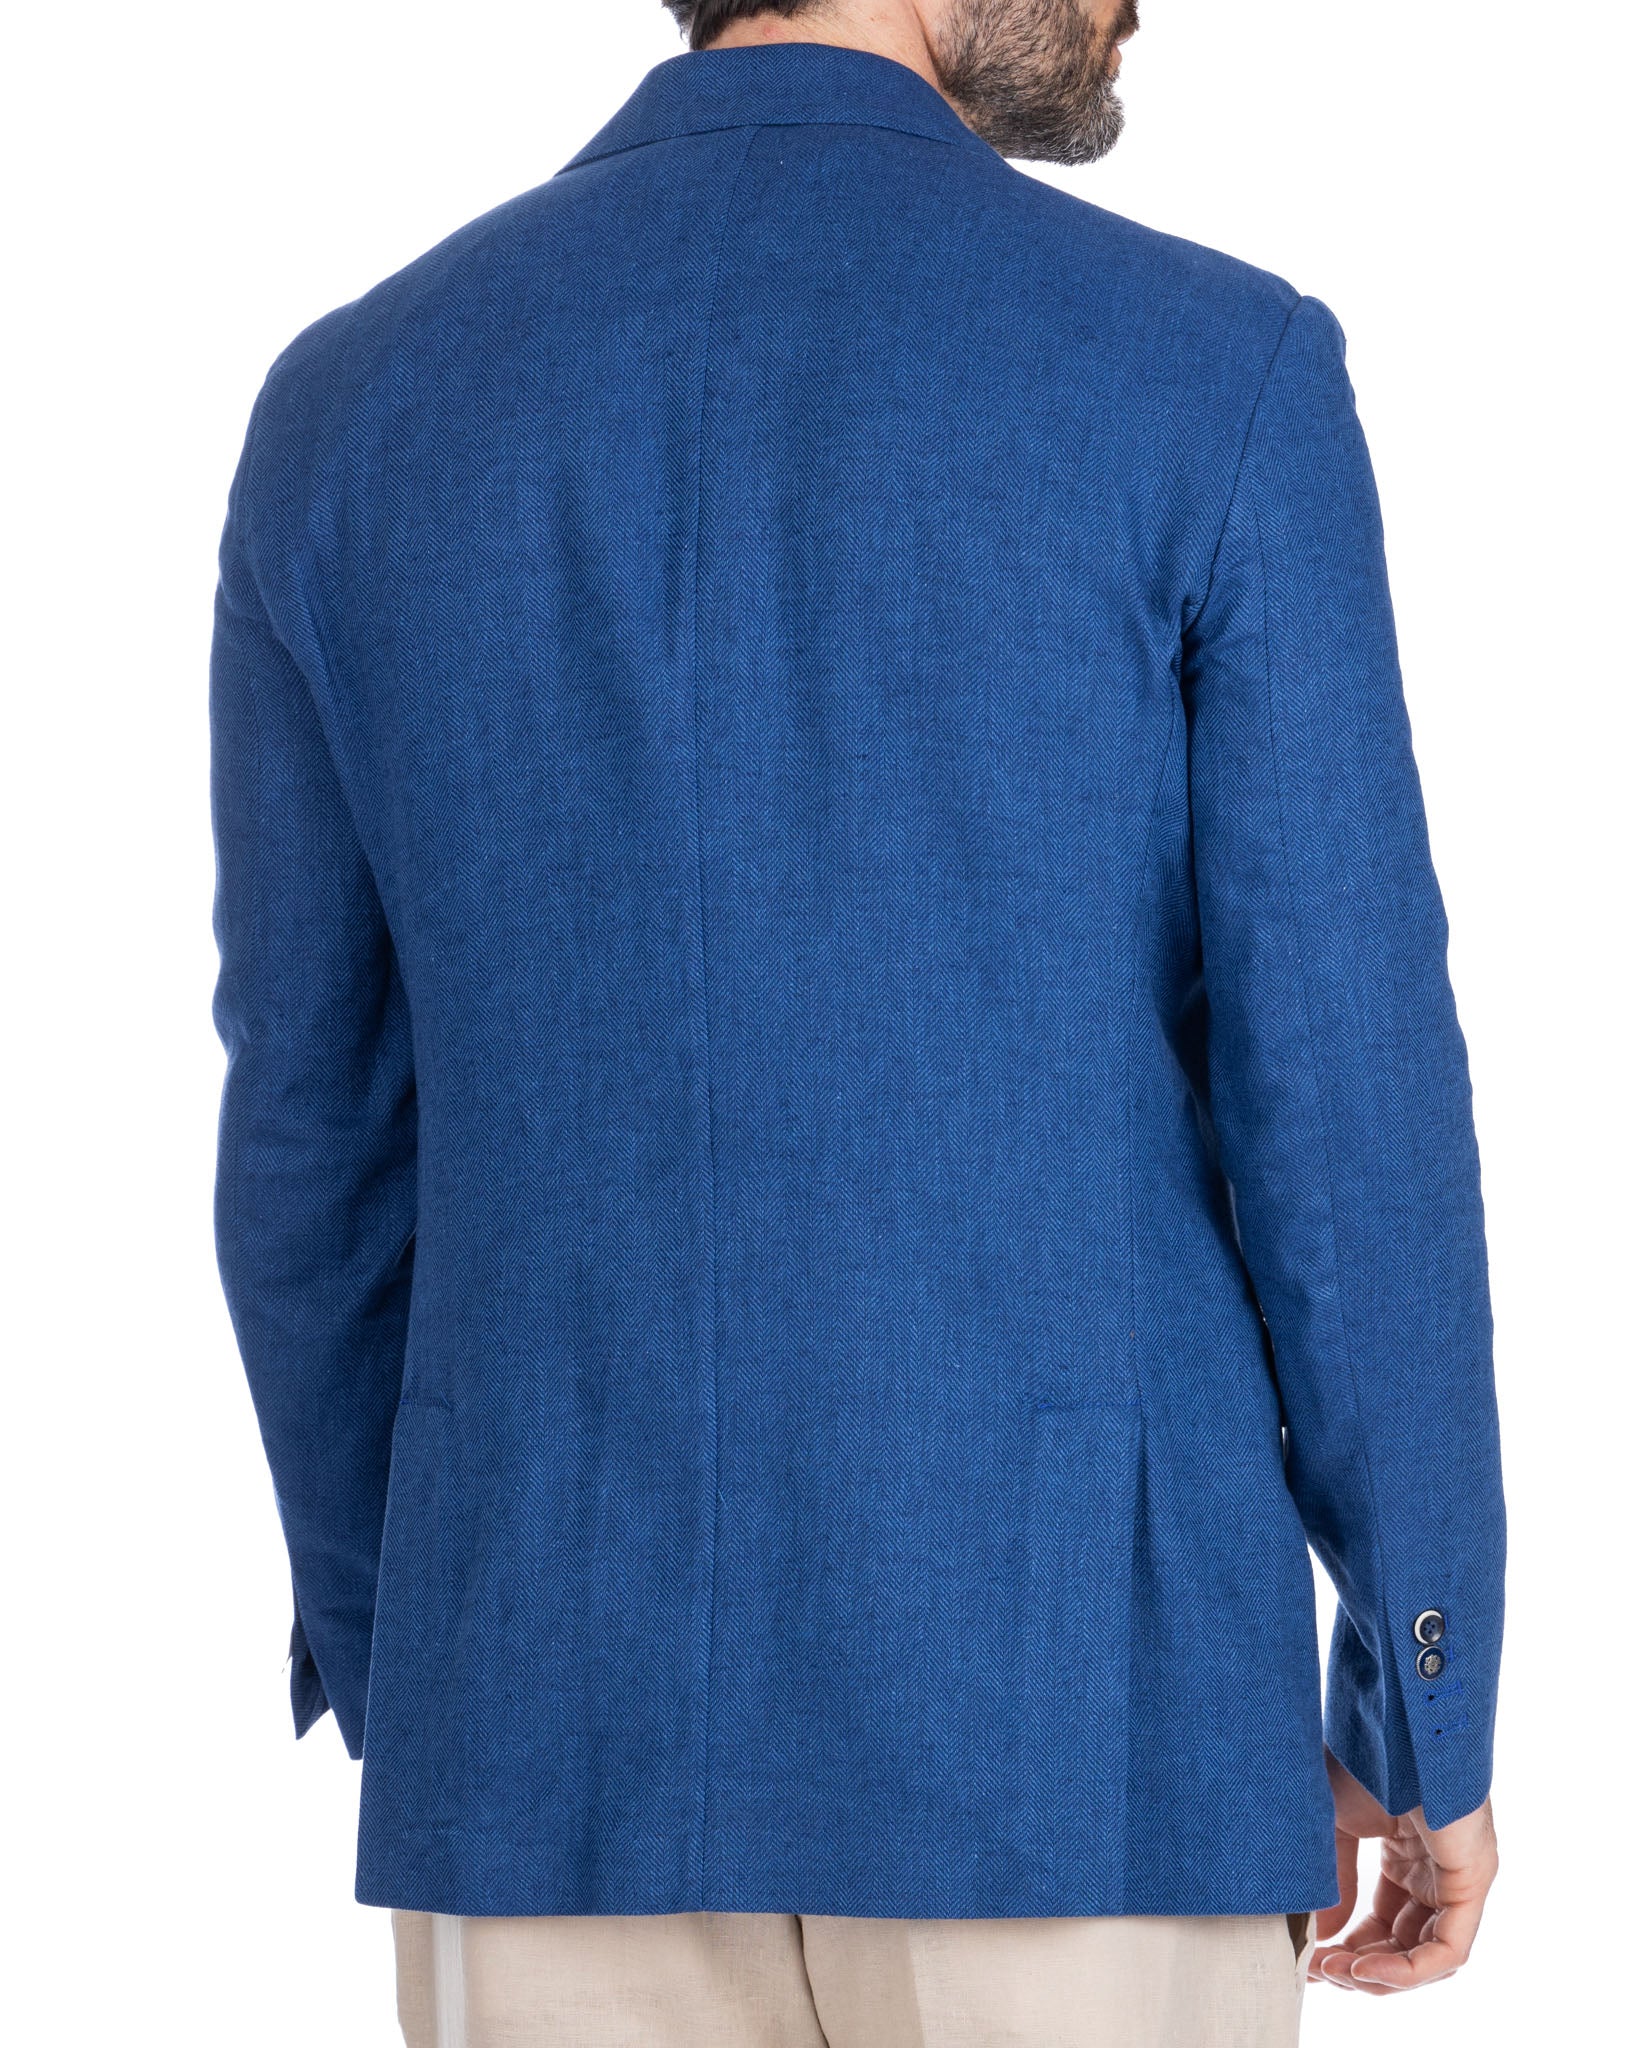 Treia - single-breasted blue herringbone jacket